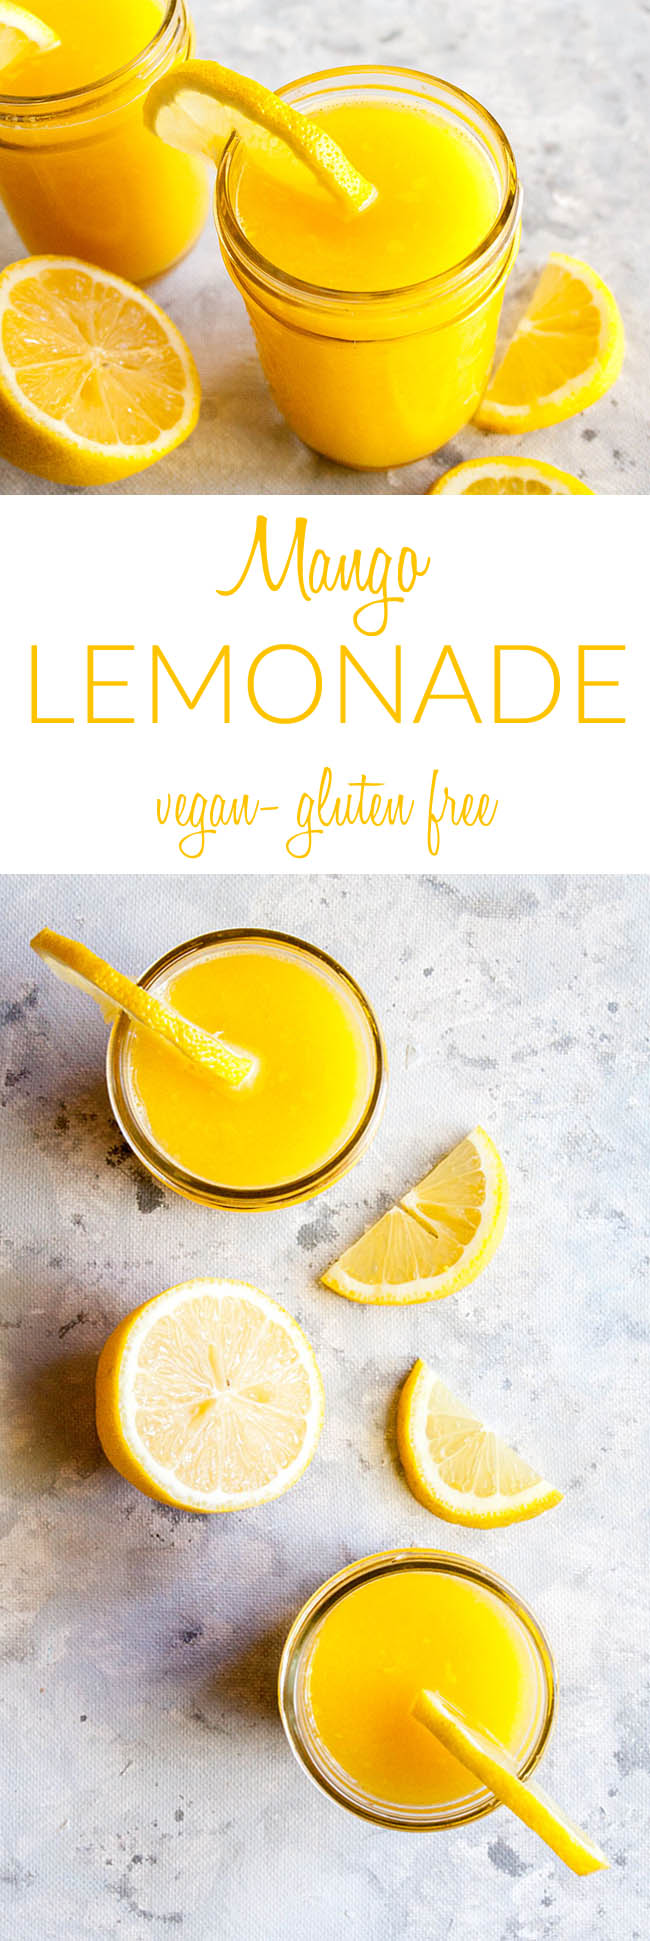 Mango Lemonade collage photo with text.